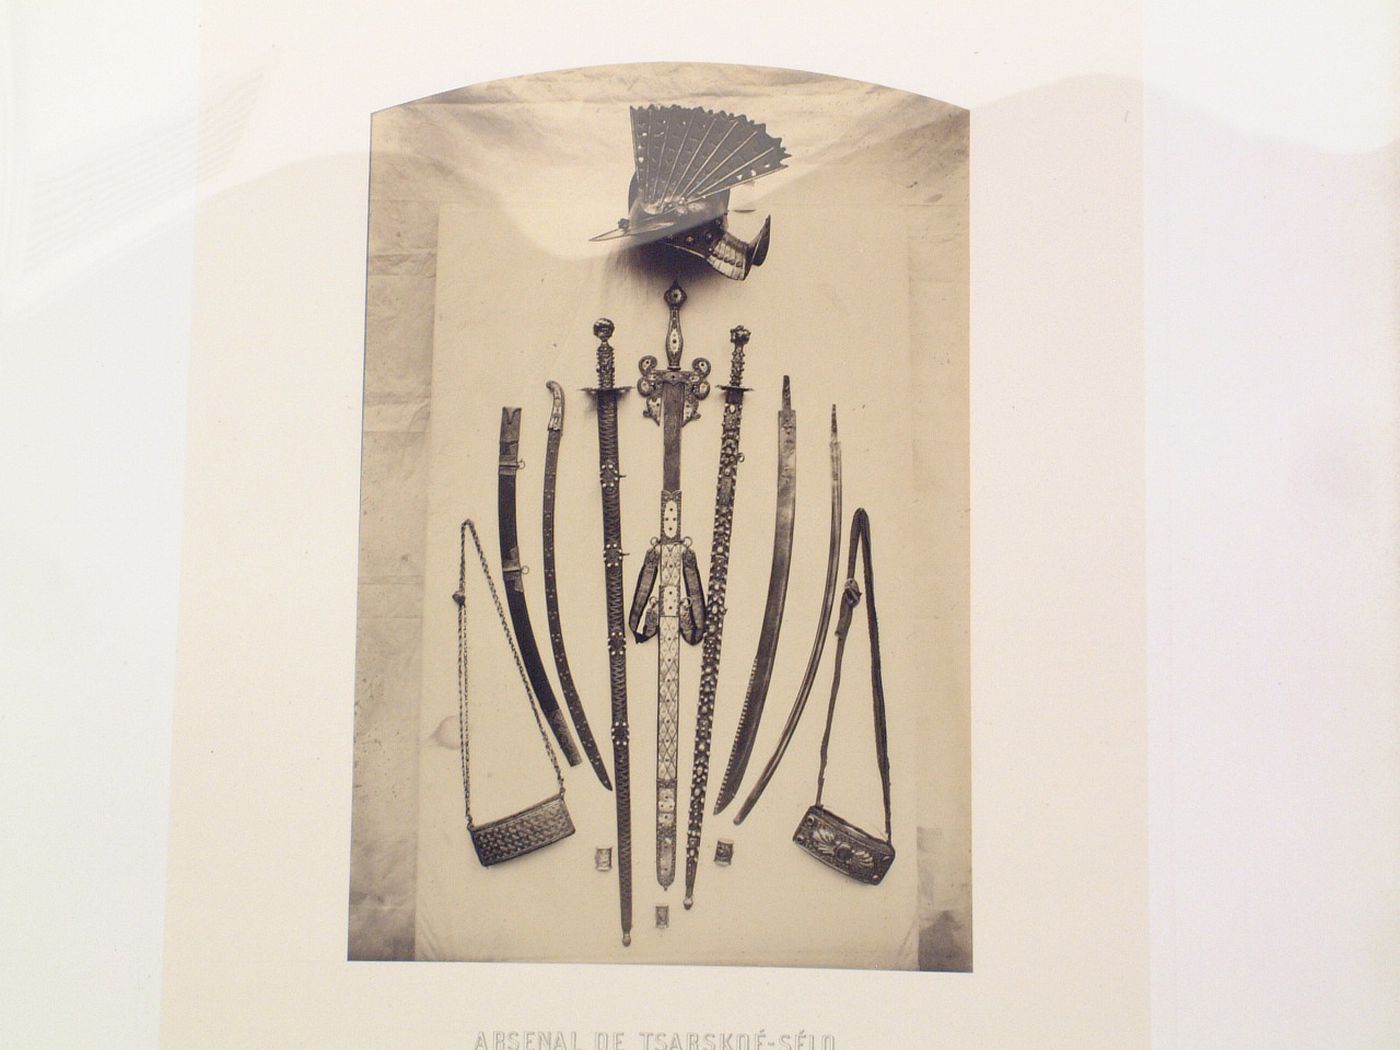 Display of swords, sabers, and equipment, Armoury, Tsarskoye Selo (now Pushkin), Russia